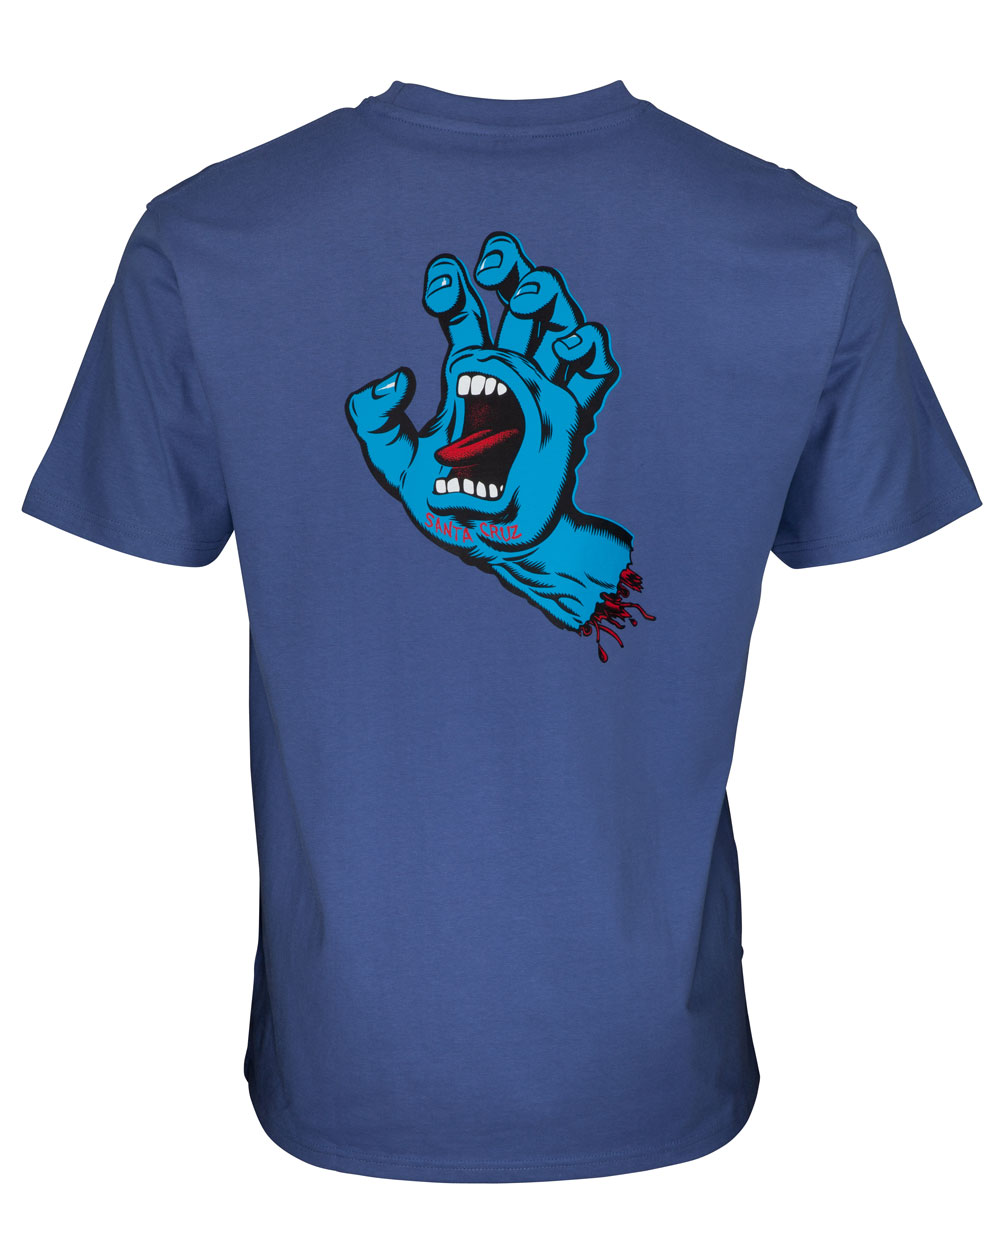 Santa Cruz Men's T-Shirt Screaming Hand Chest Washed Navy